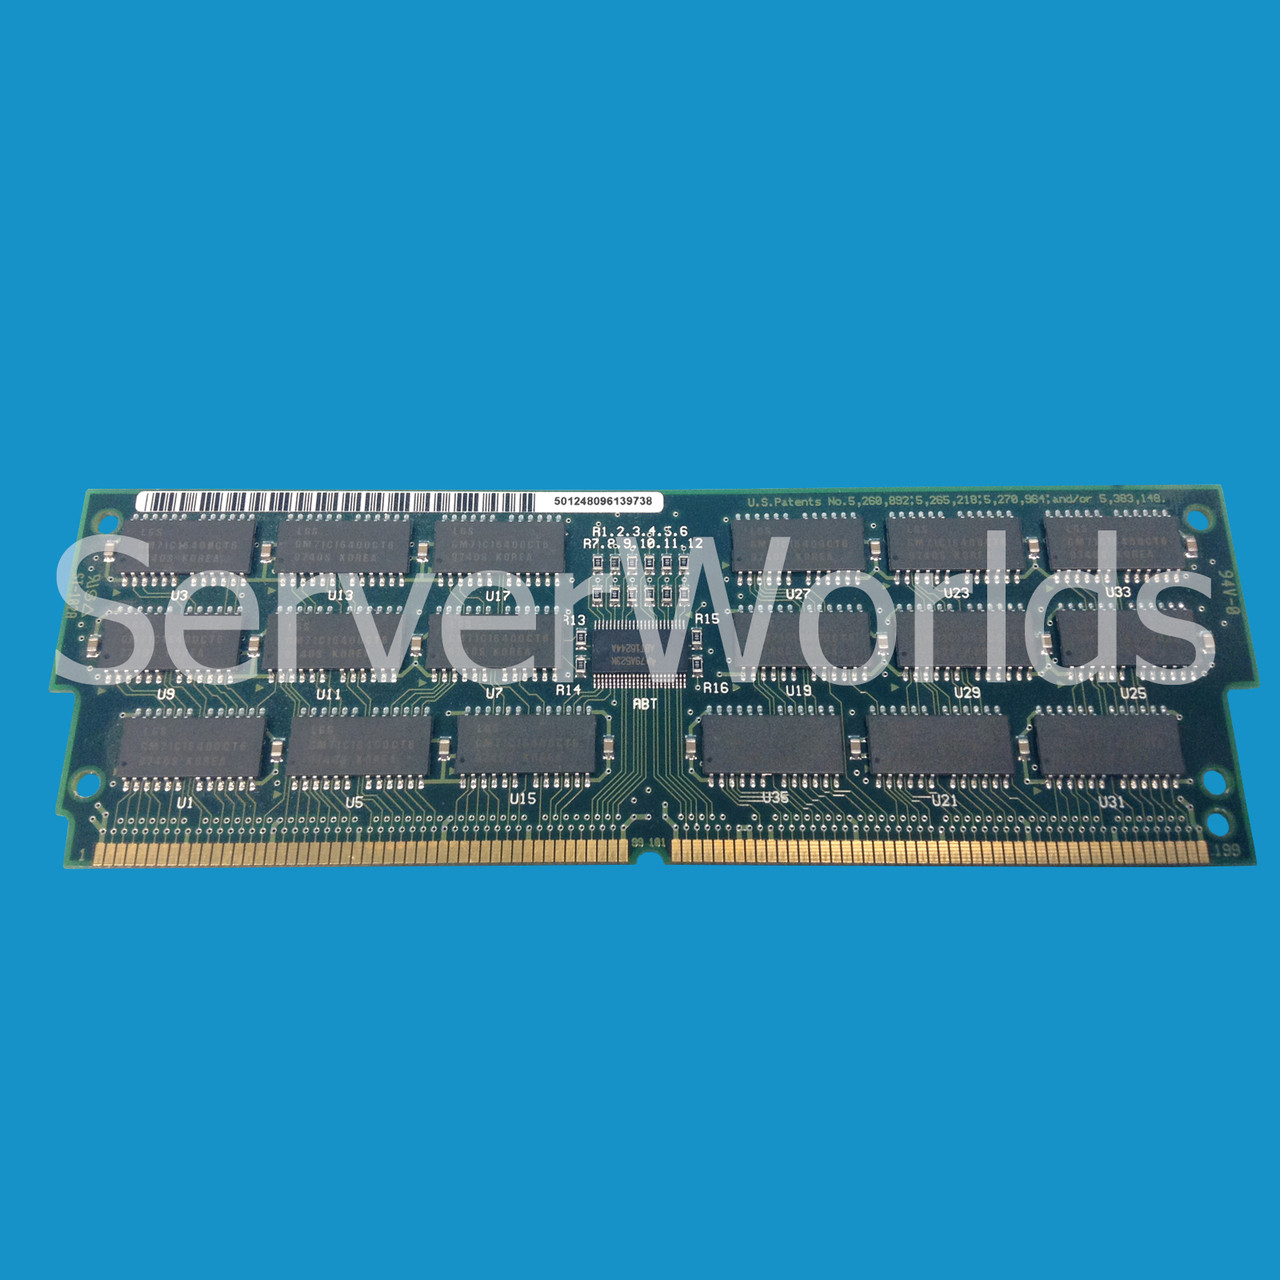 Sun 501-2480 64MB Memory Module (Sparc 20)